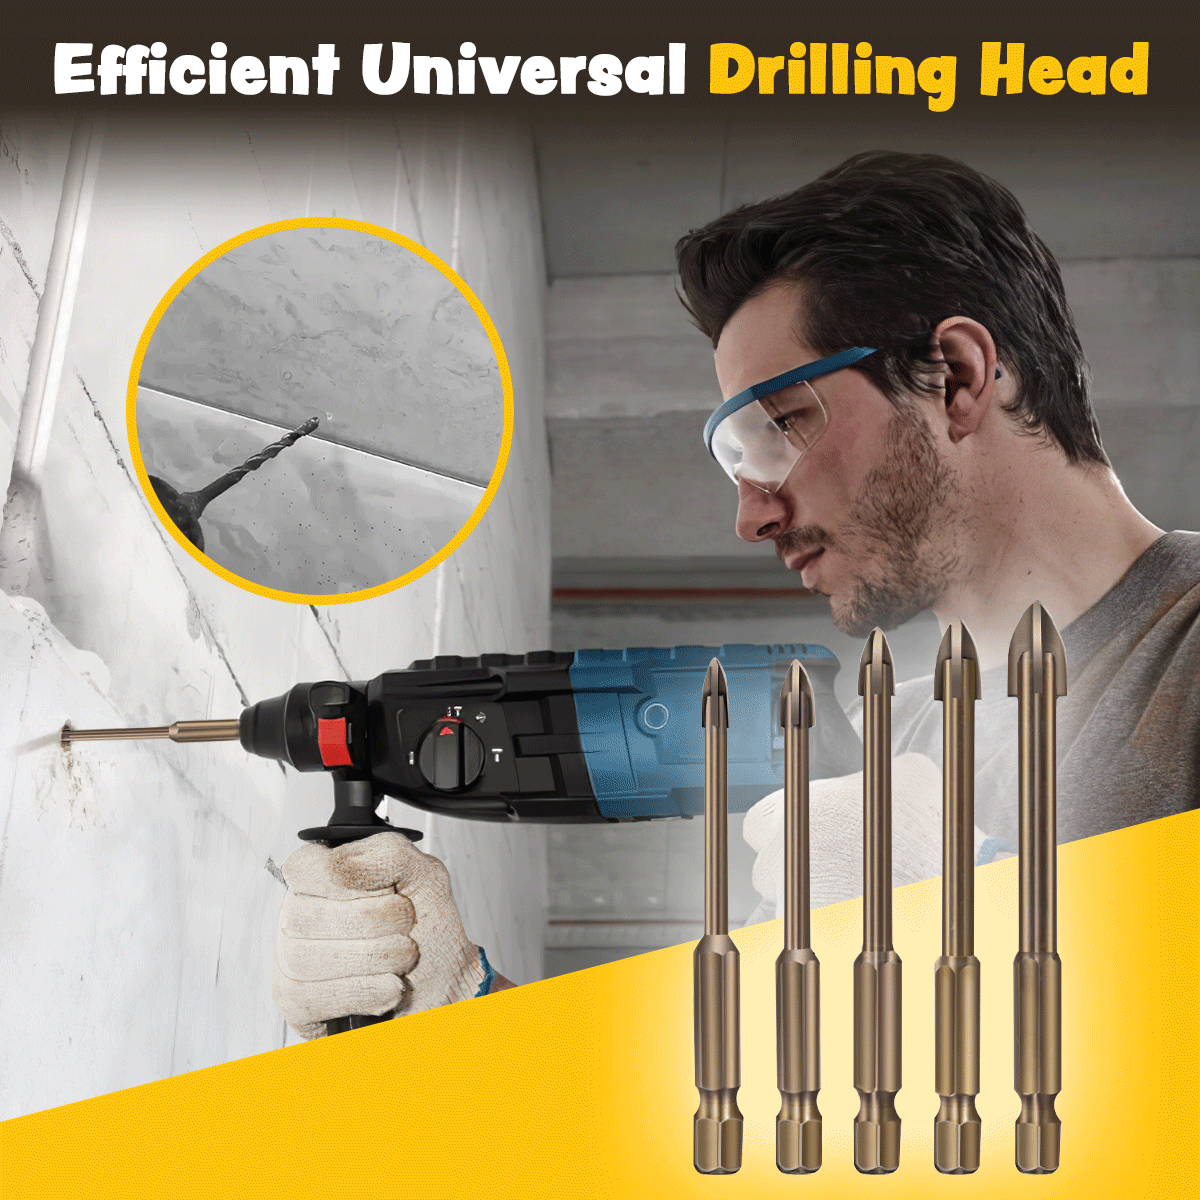 Efficient Universal Drilling Head